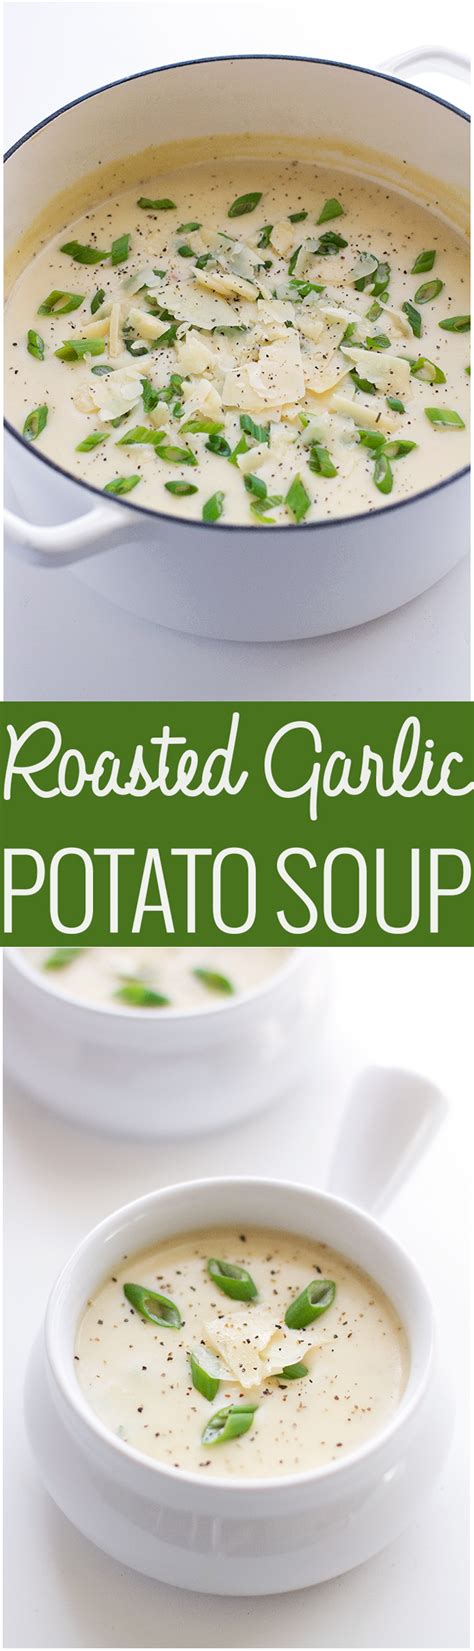 Roasted Garlic Potato Soup Recipe Little Spice Jar